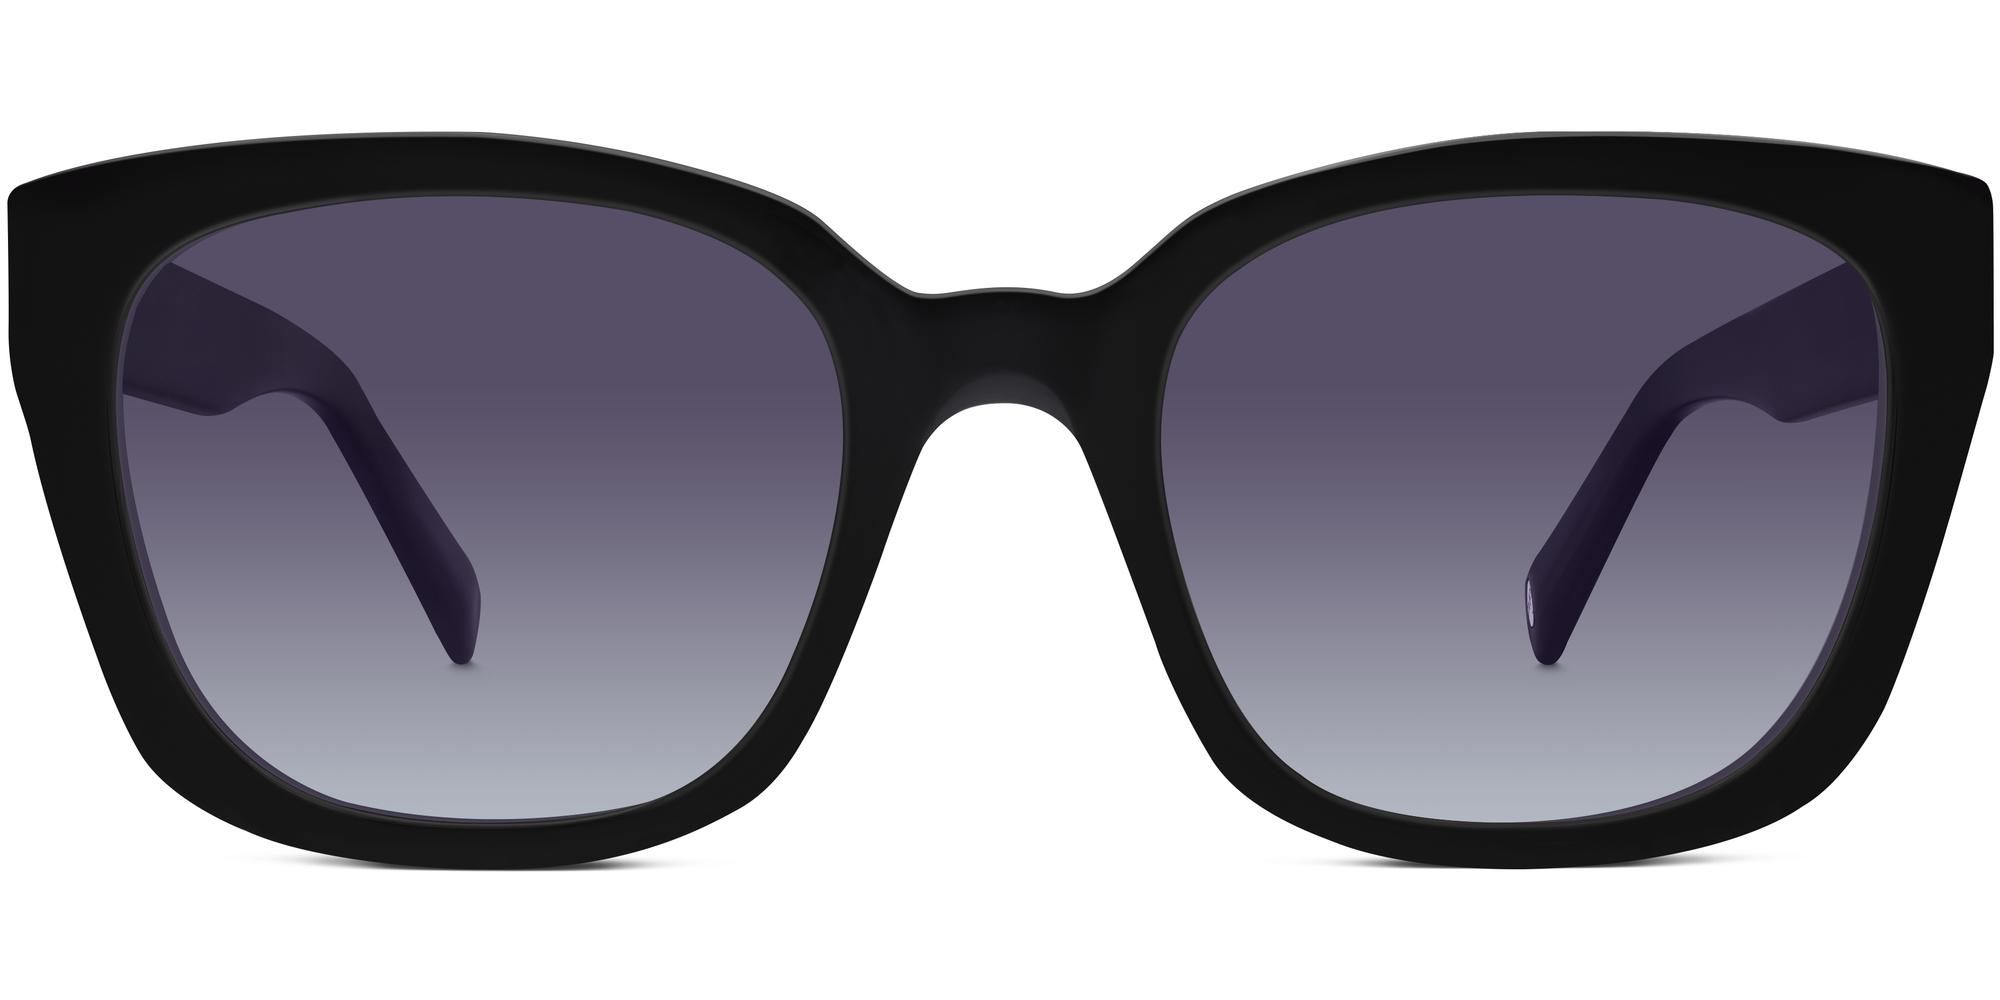 Aubrey Sunglasses in Jet Black with Violet Gradient lenses for Women | Warby Parker